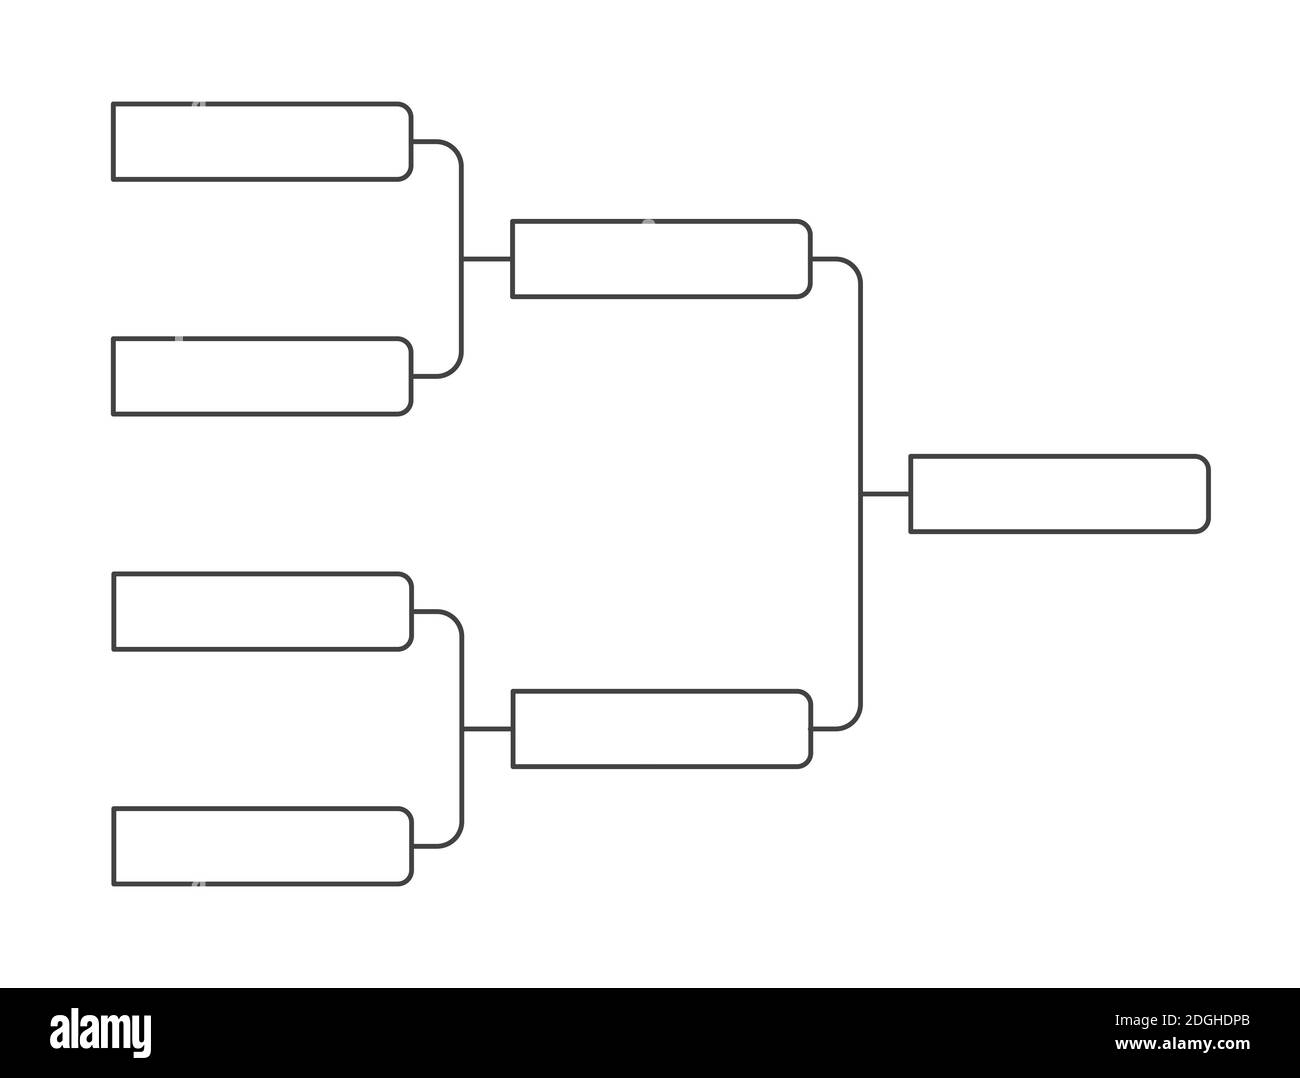 4-team-tournament-bracket-championship-template-flat-style-design